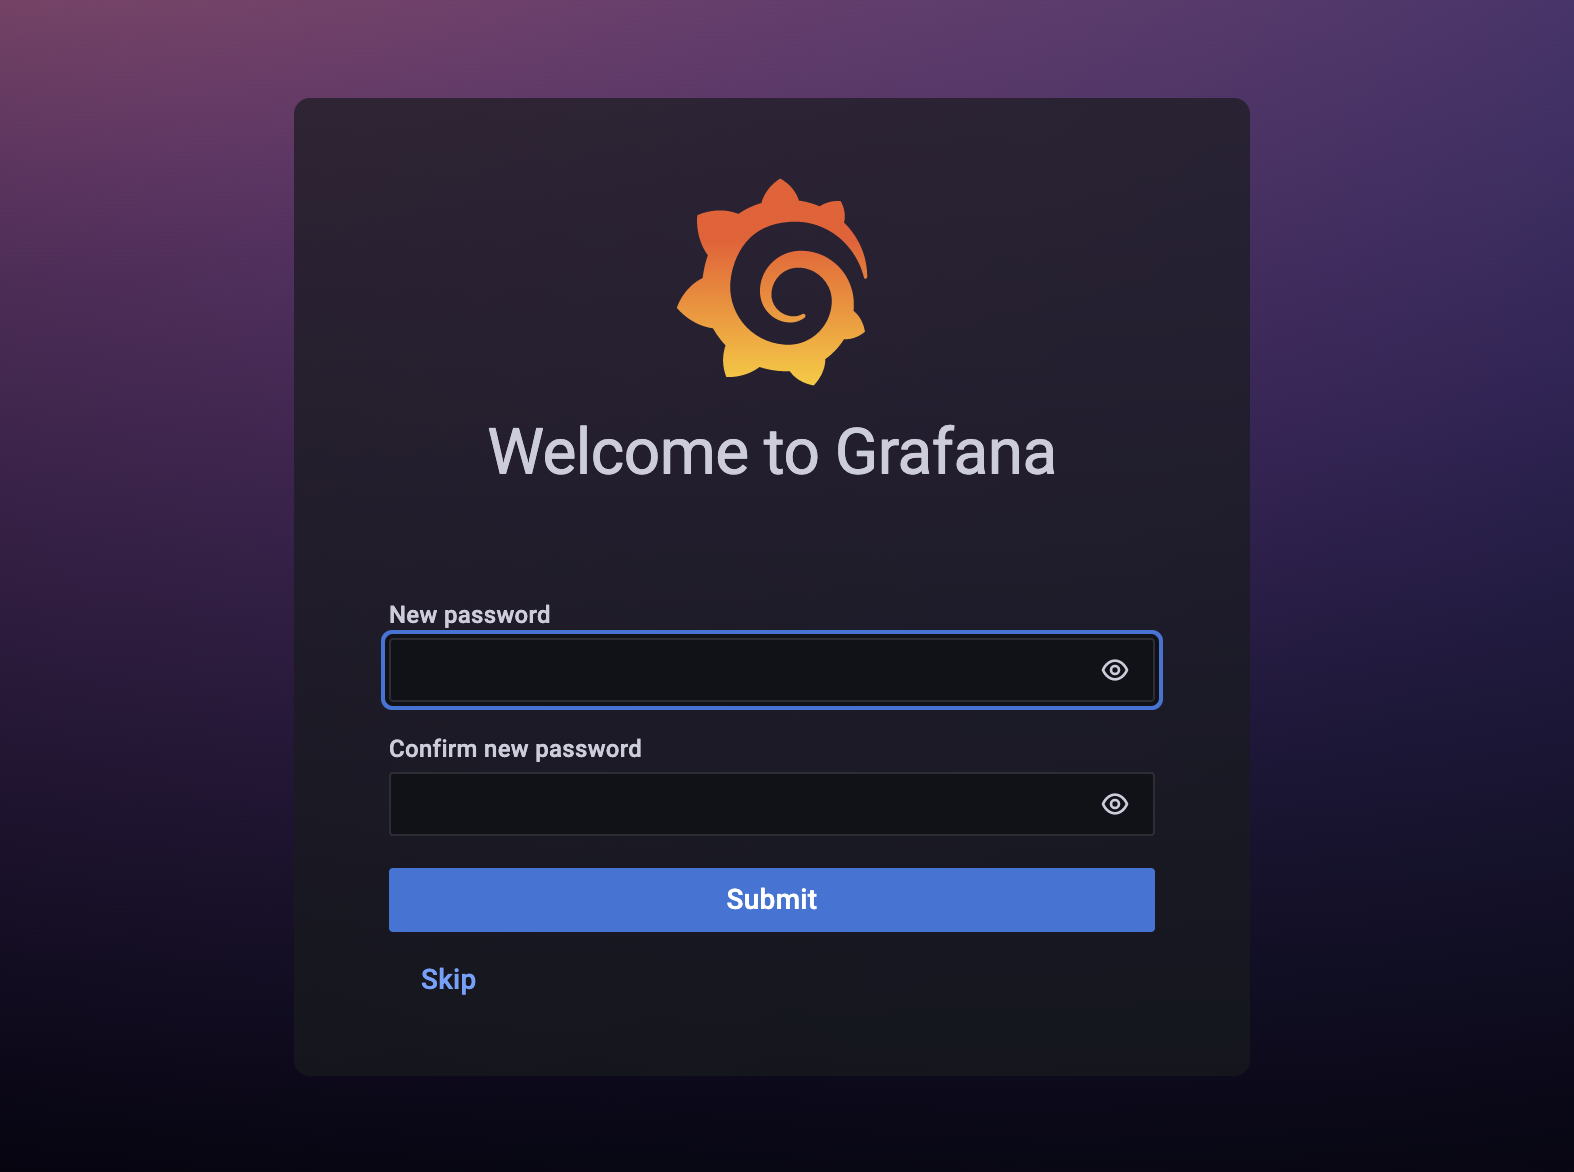 Change password prompt from Grafana